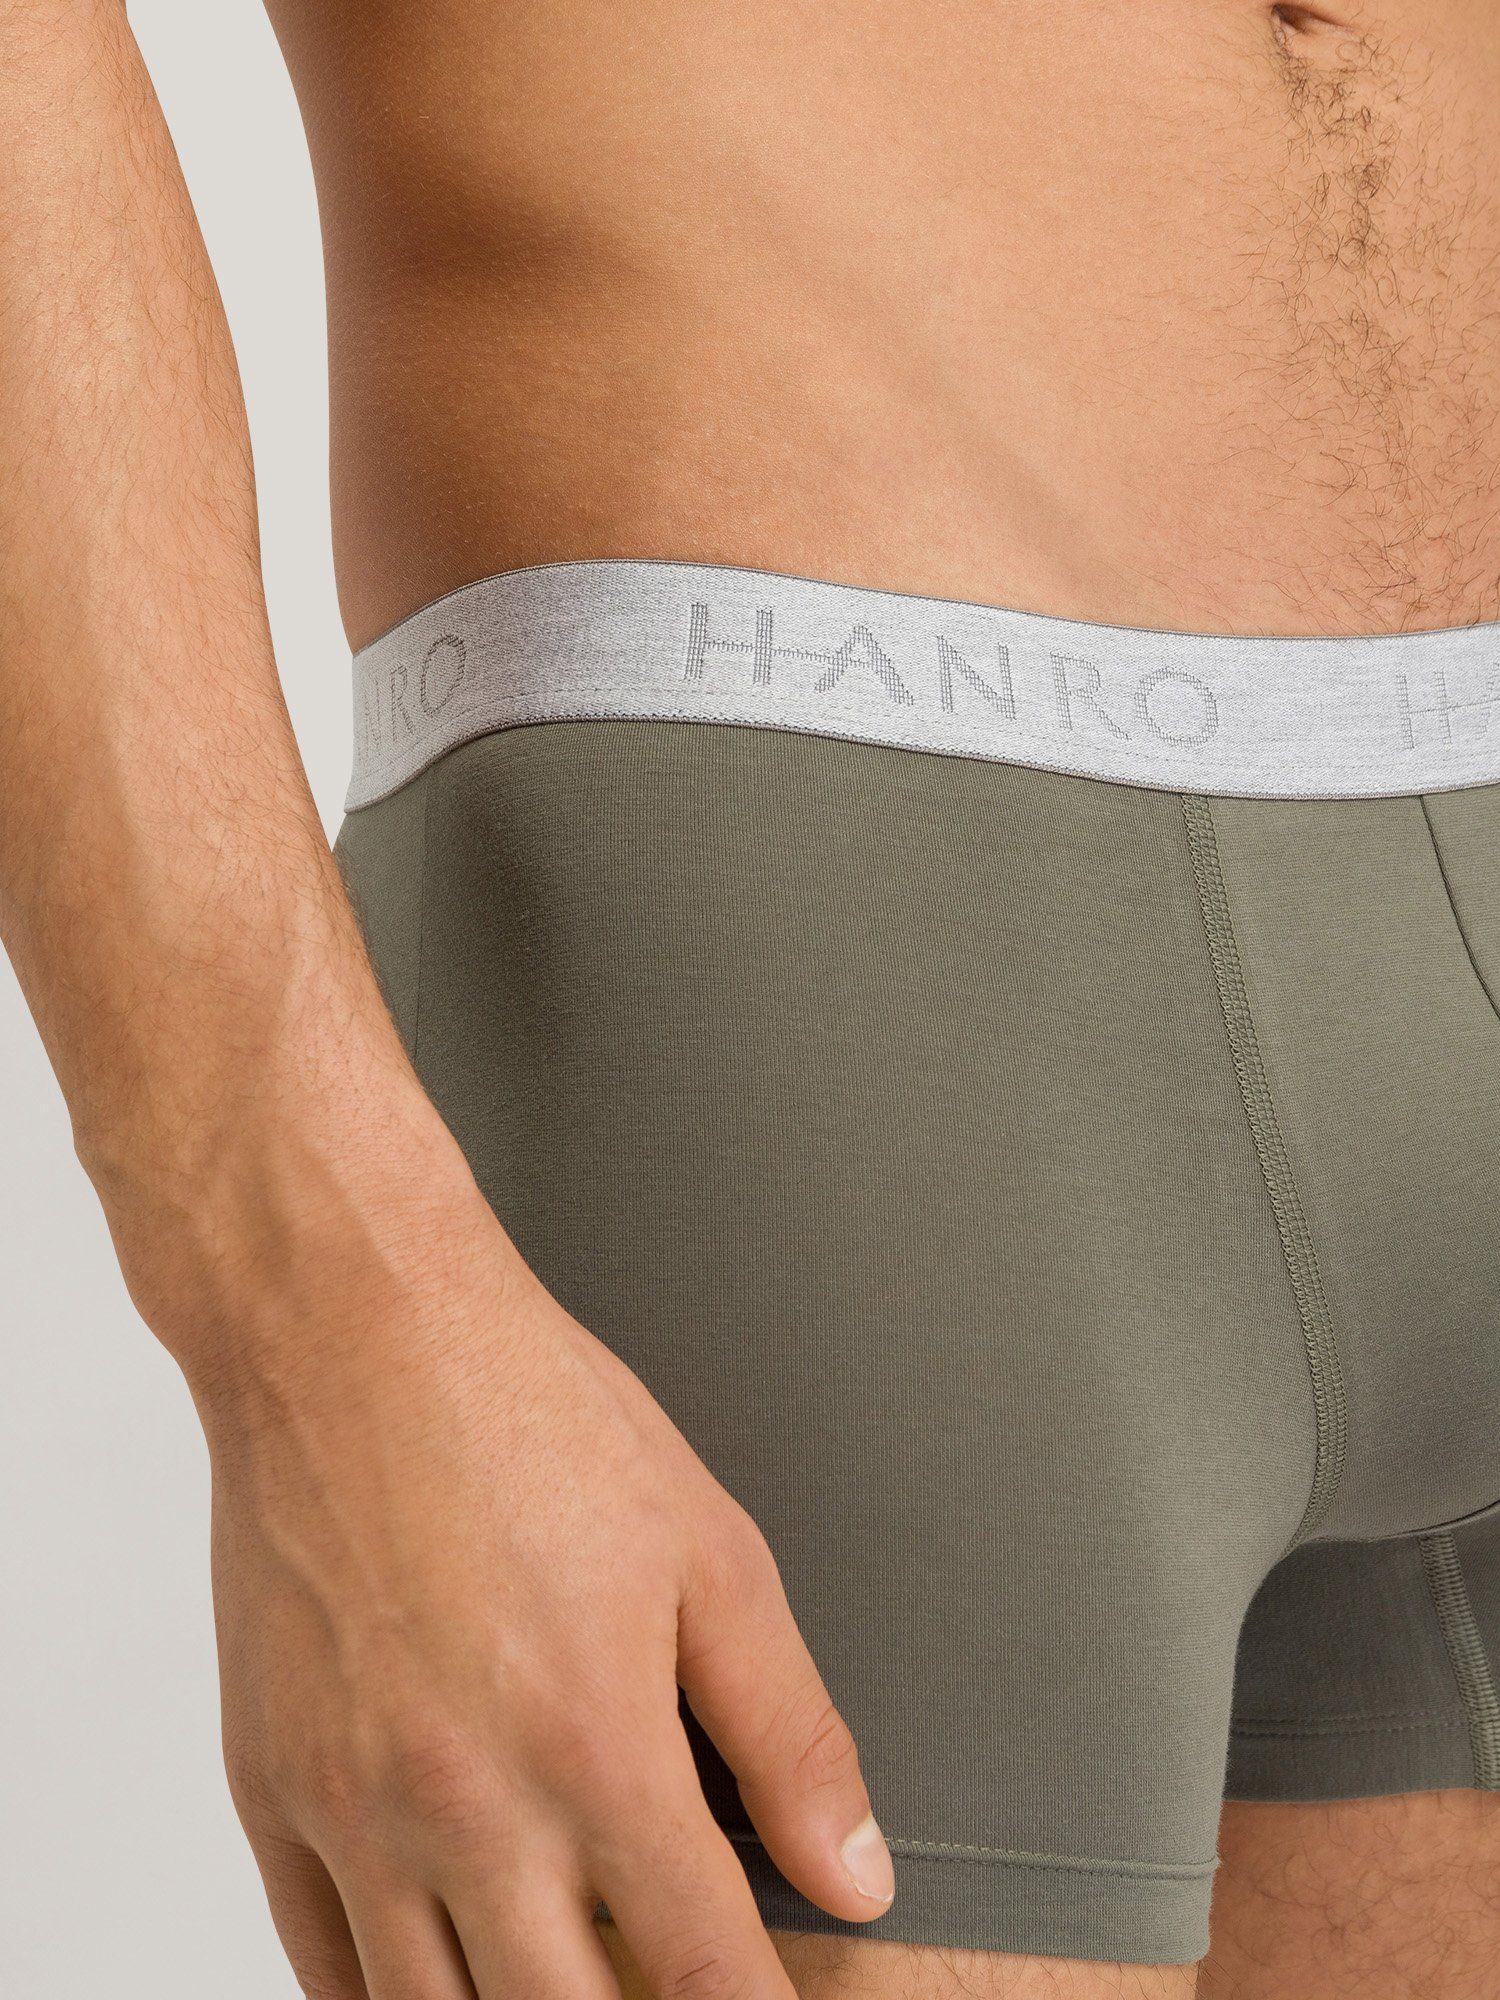 Hanro Retro green/ebony Cotton Pants antique Essentials 2-Pack (2-St)